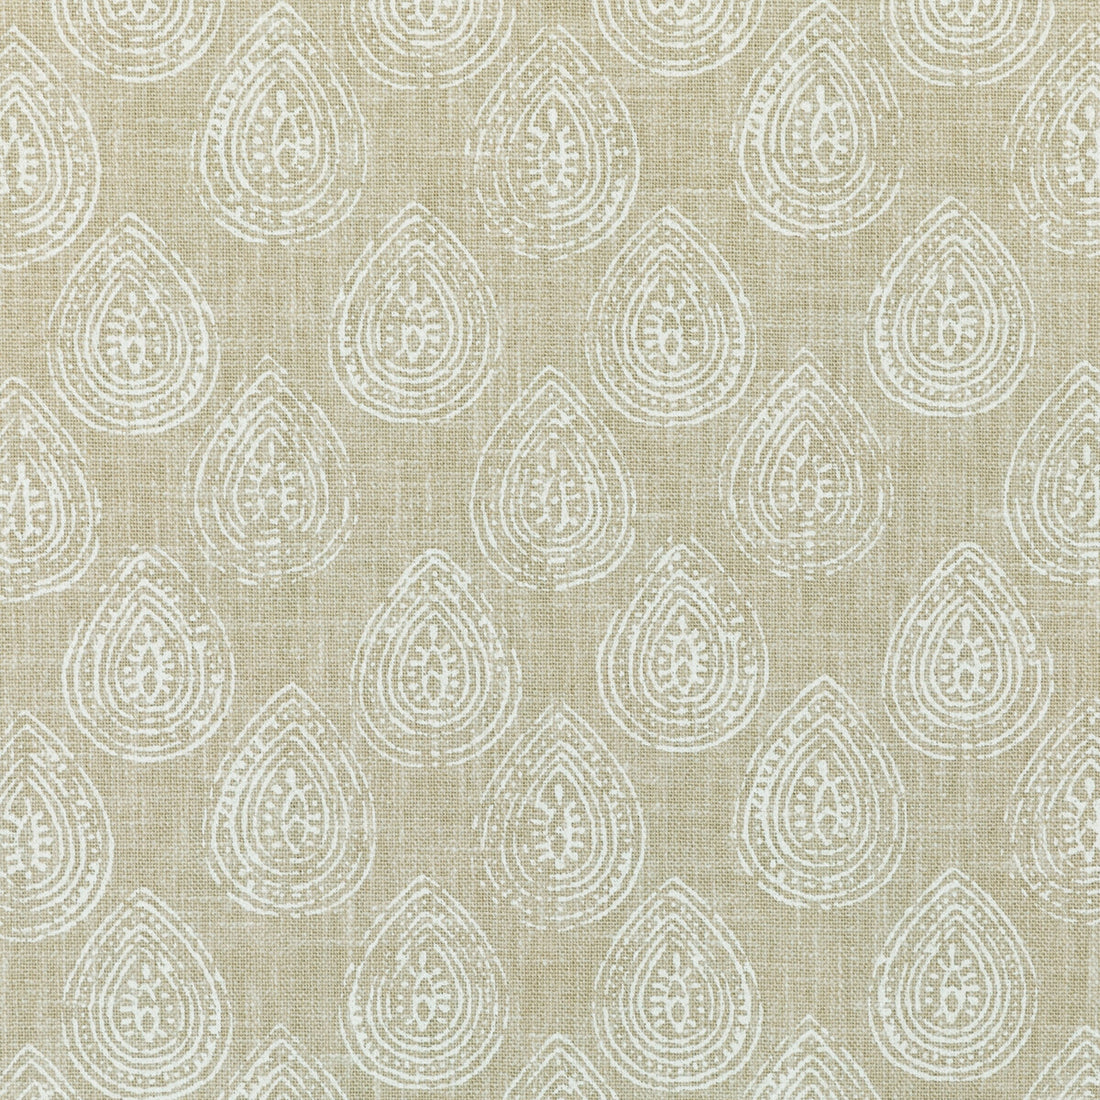 Kravet Basics fabric in calico-16 color - pattern CALICO.16.0 - by Kravet Basics in the L&